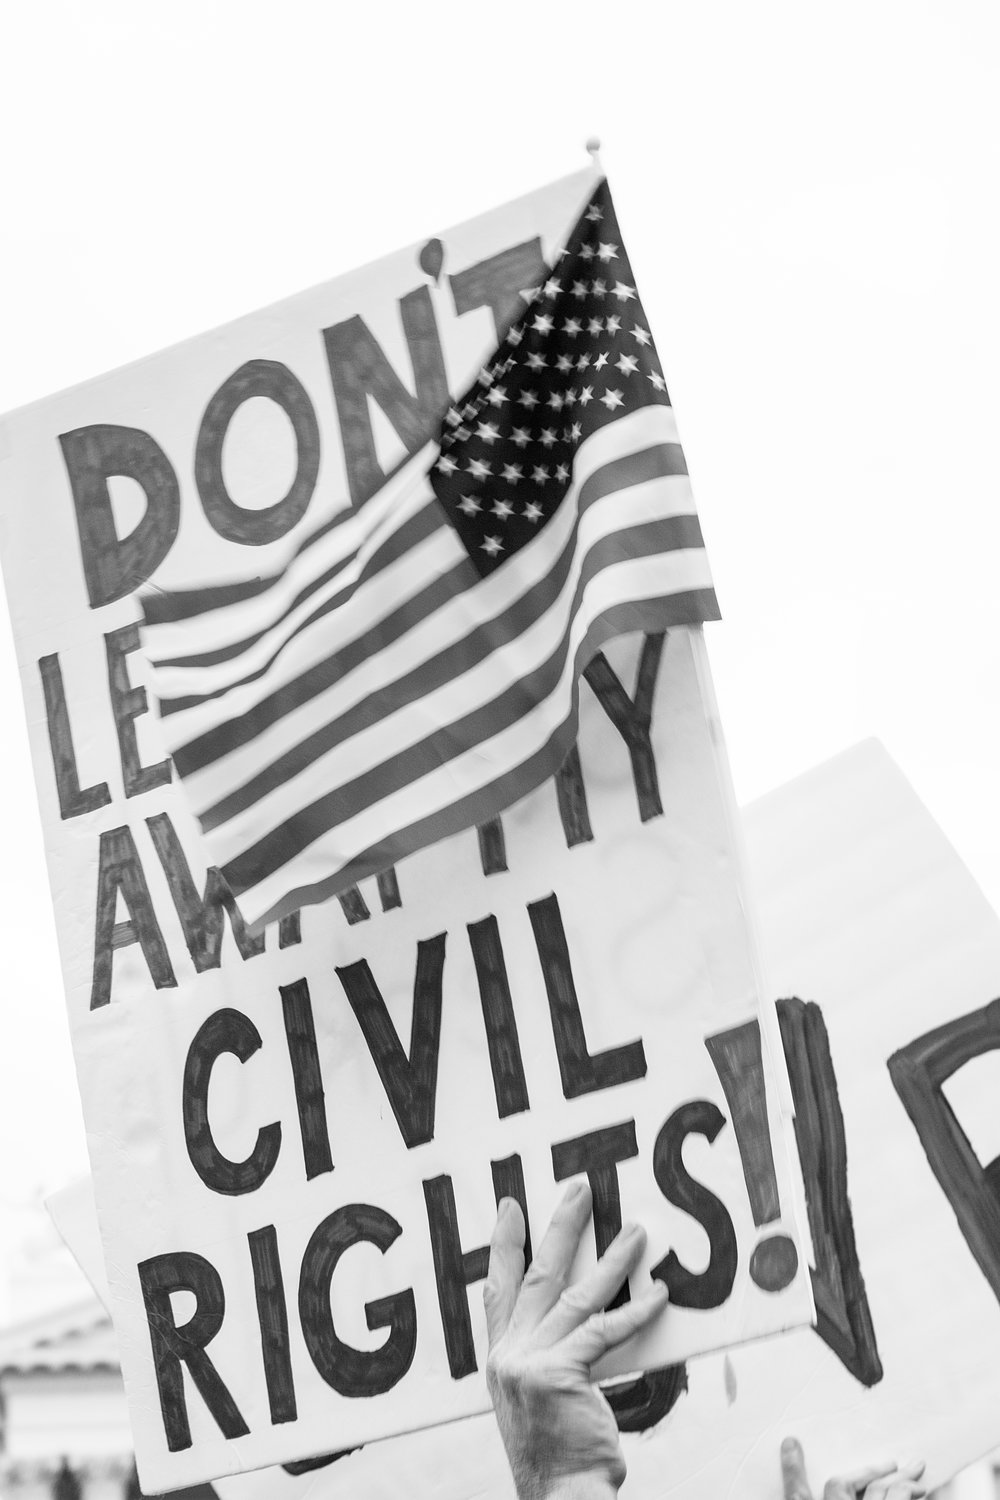   "Don't Legislate Away My Civil Rights!" Sacramento, California, USA (January 21, 2017)  